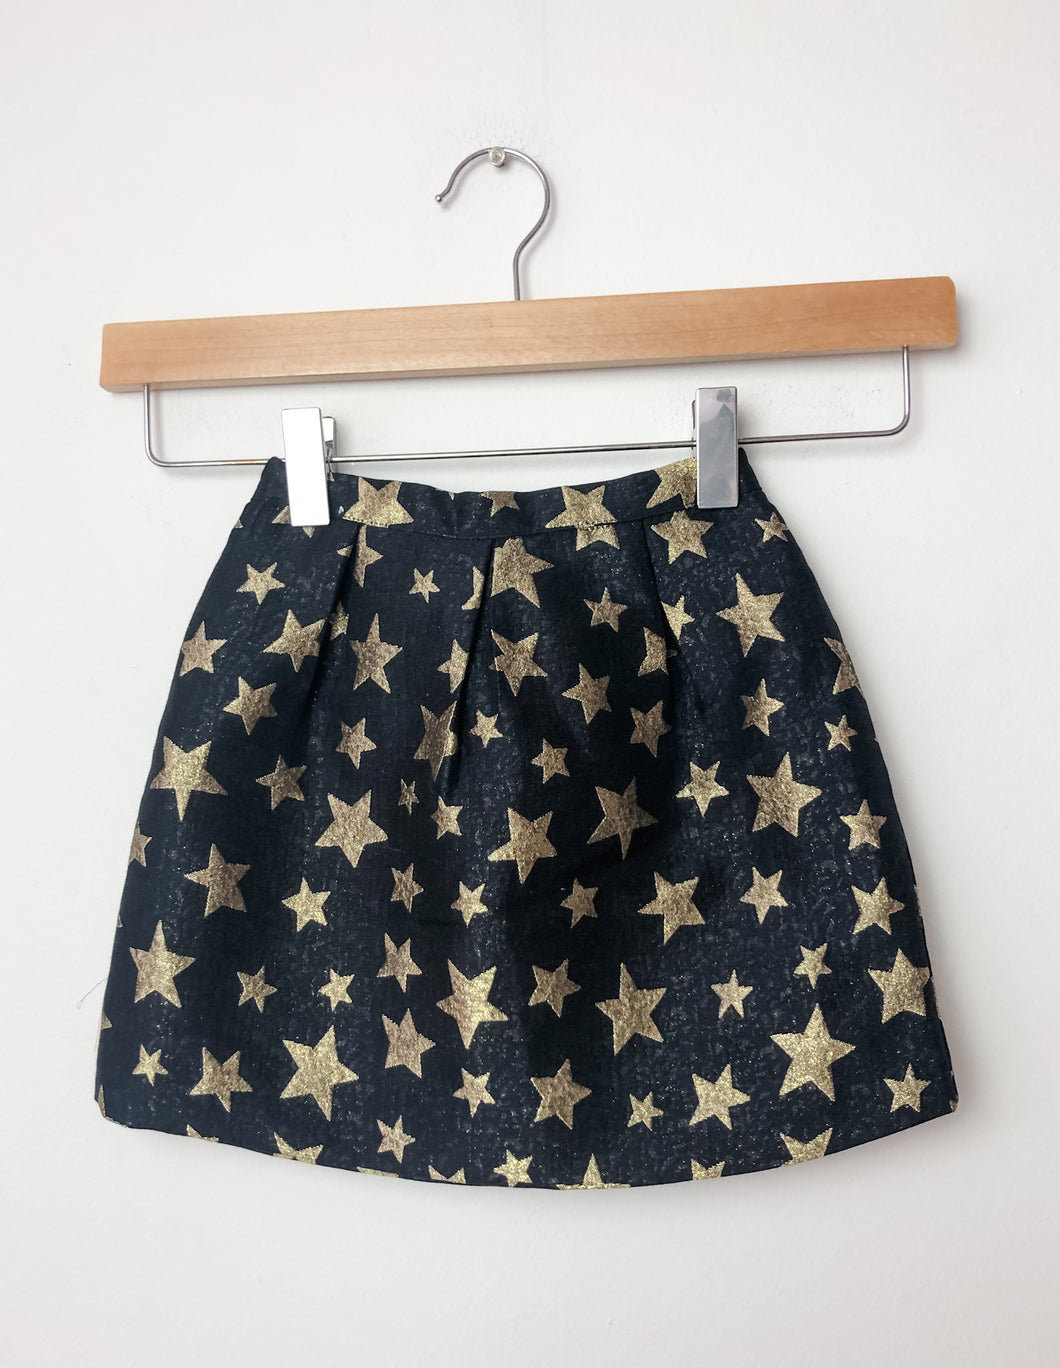 Stars Mamas & Papas Skirt Size 12-18 Months